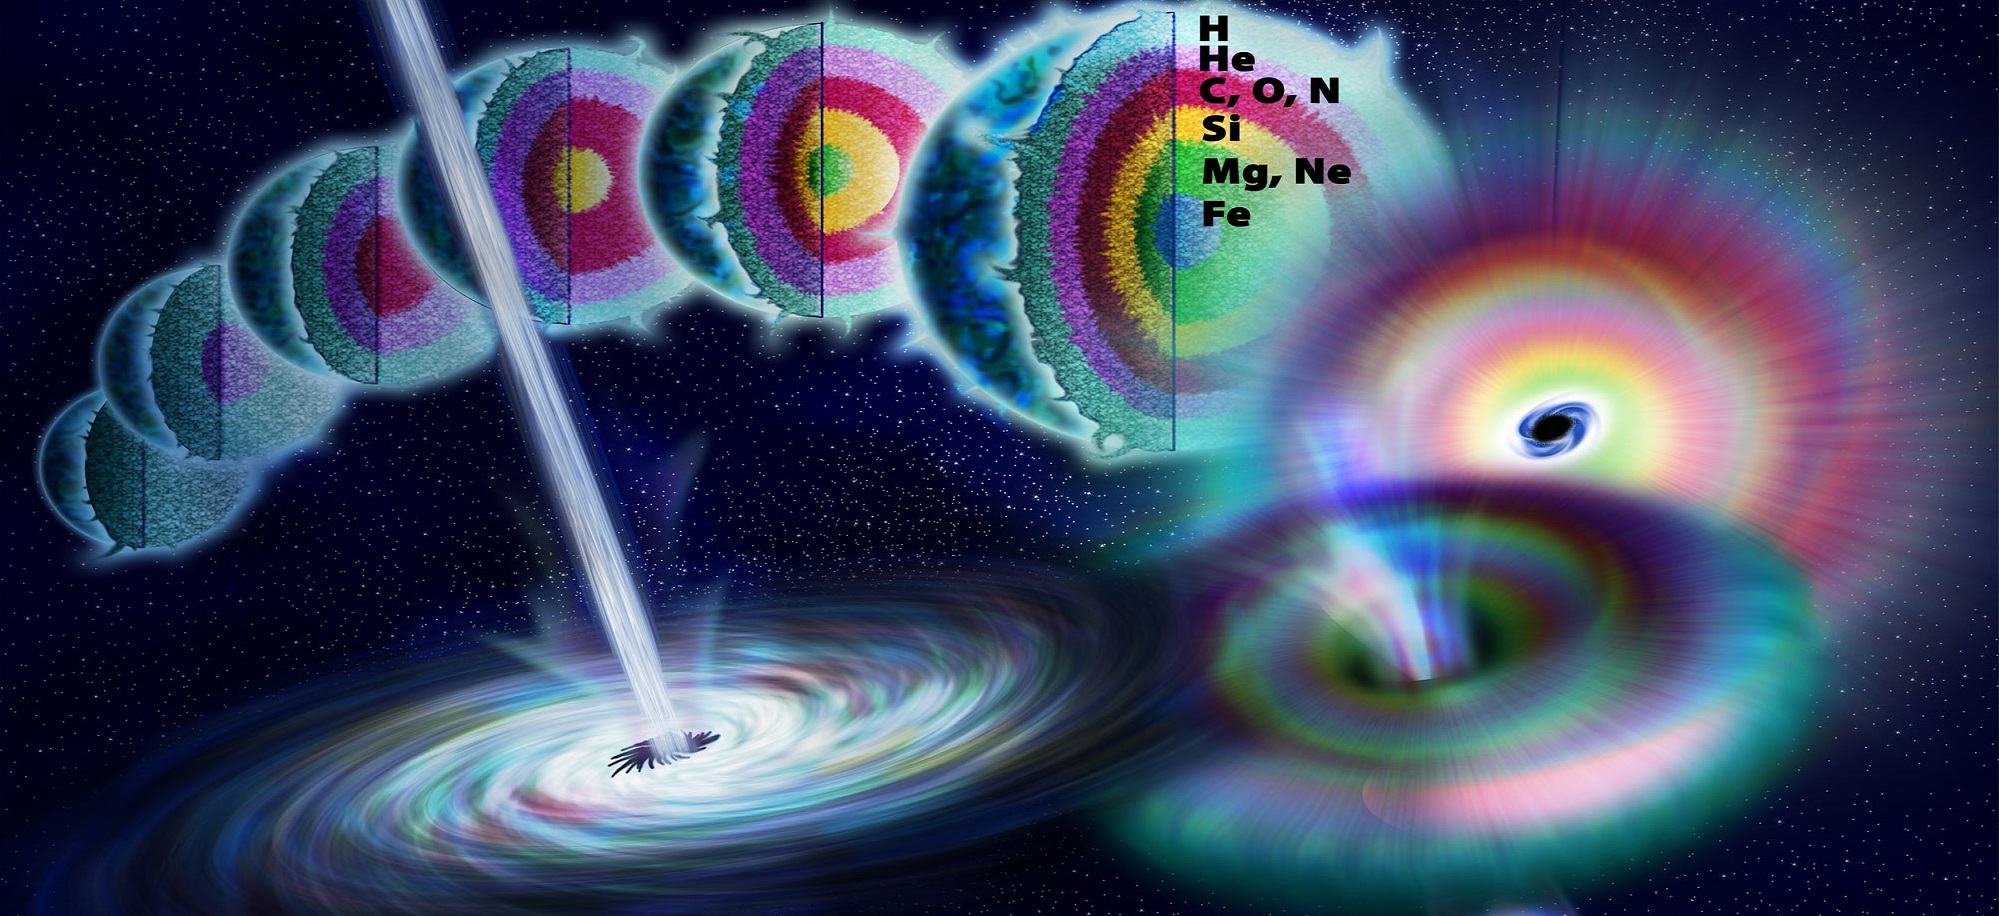 gamma rays travel faster than light